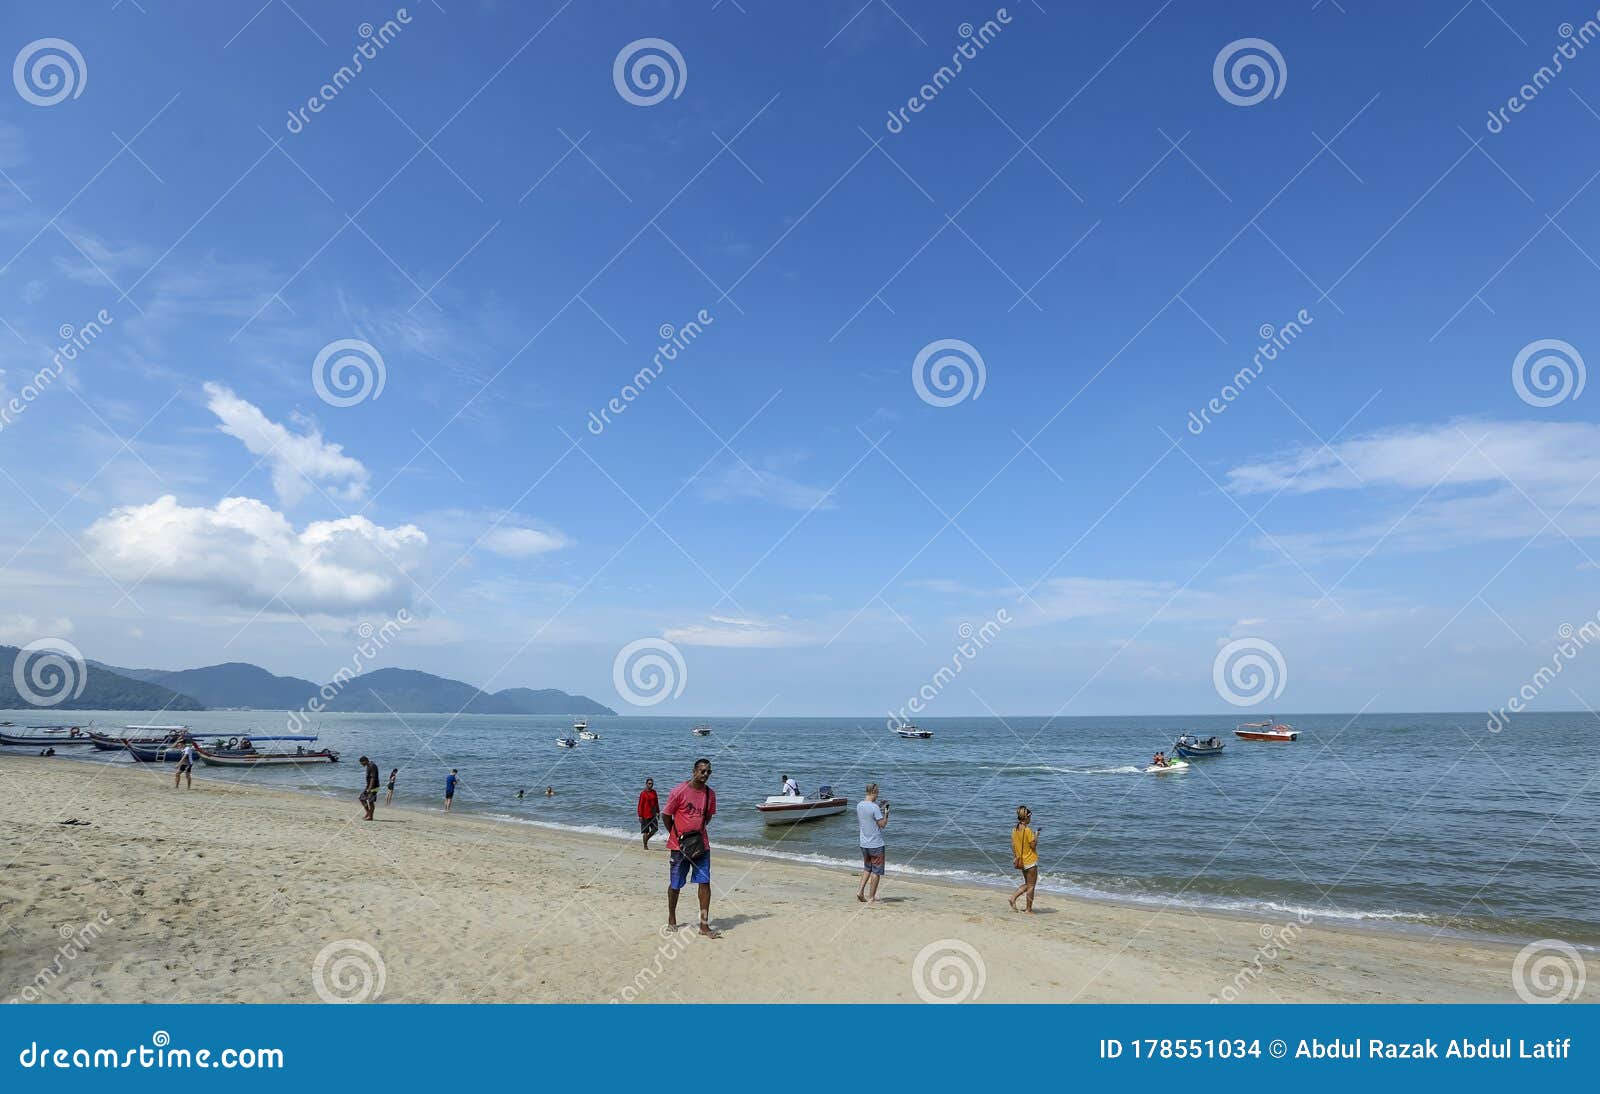 Batu Ferringhi Beach Pulau Pinang Editorial Stock Image - Image of